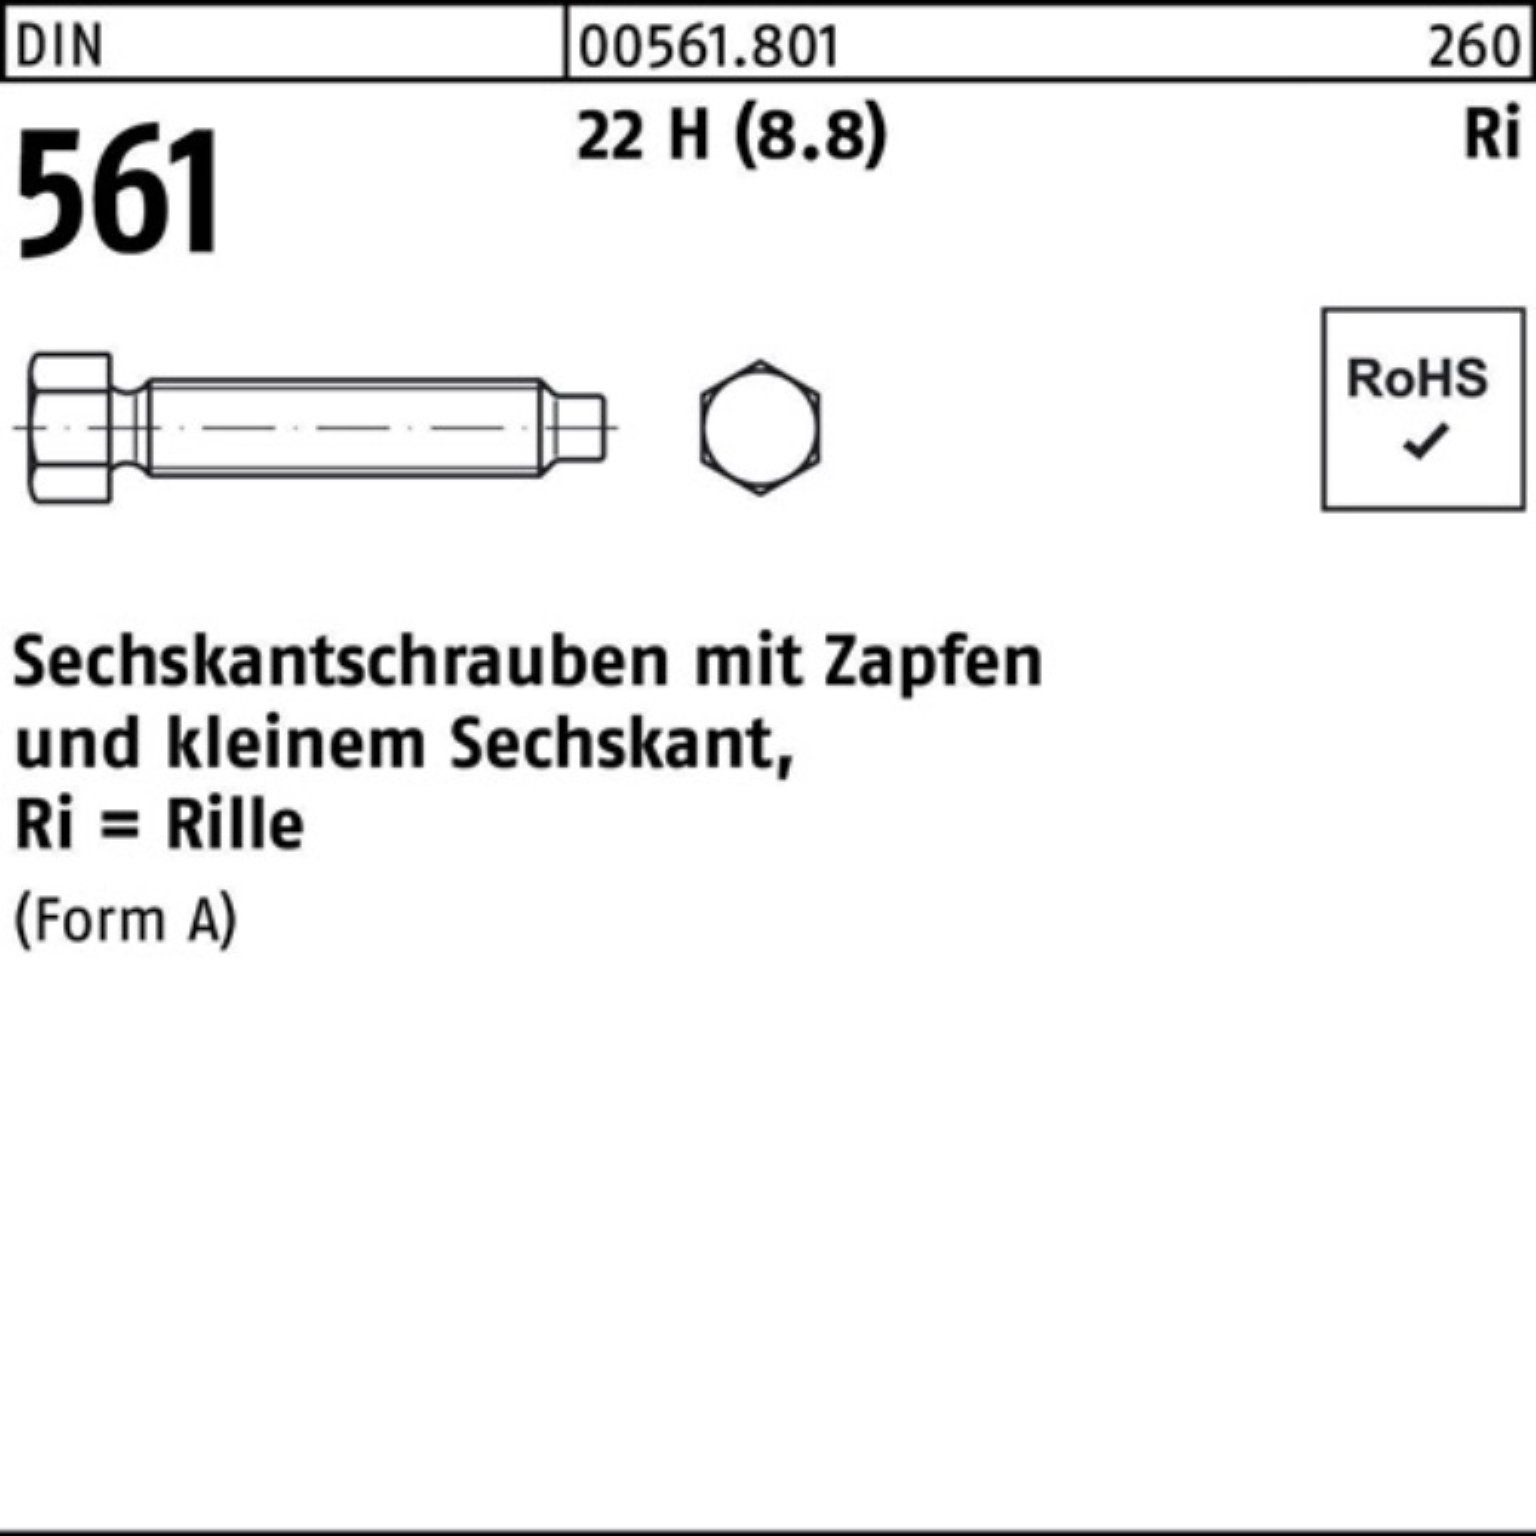 Reyher Sechskantschraube 100er Pack Sechskantschraube DIN 561 Zapfen AM 16x 35 22 H (8.8) 25 St